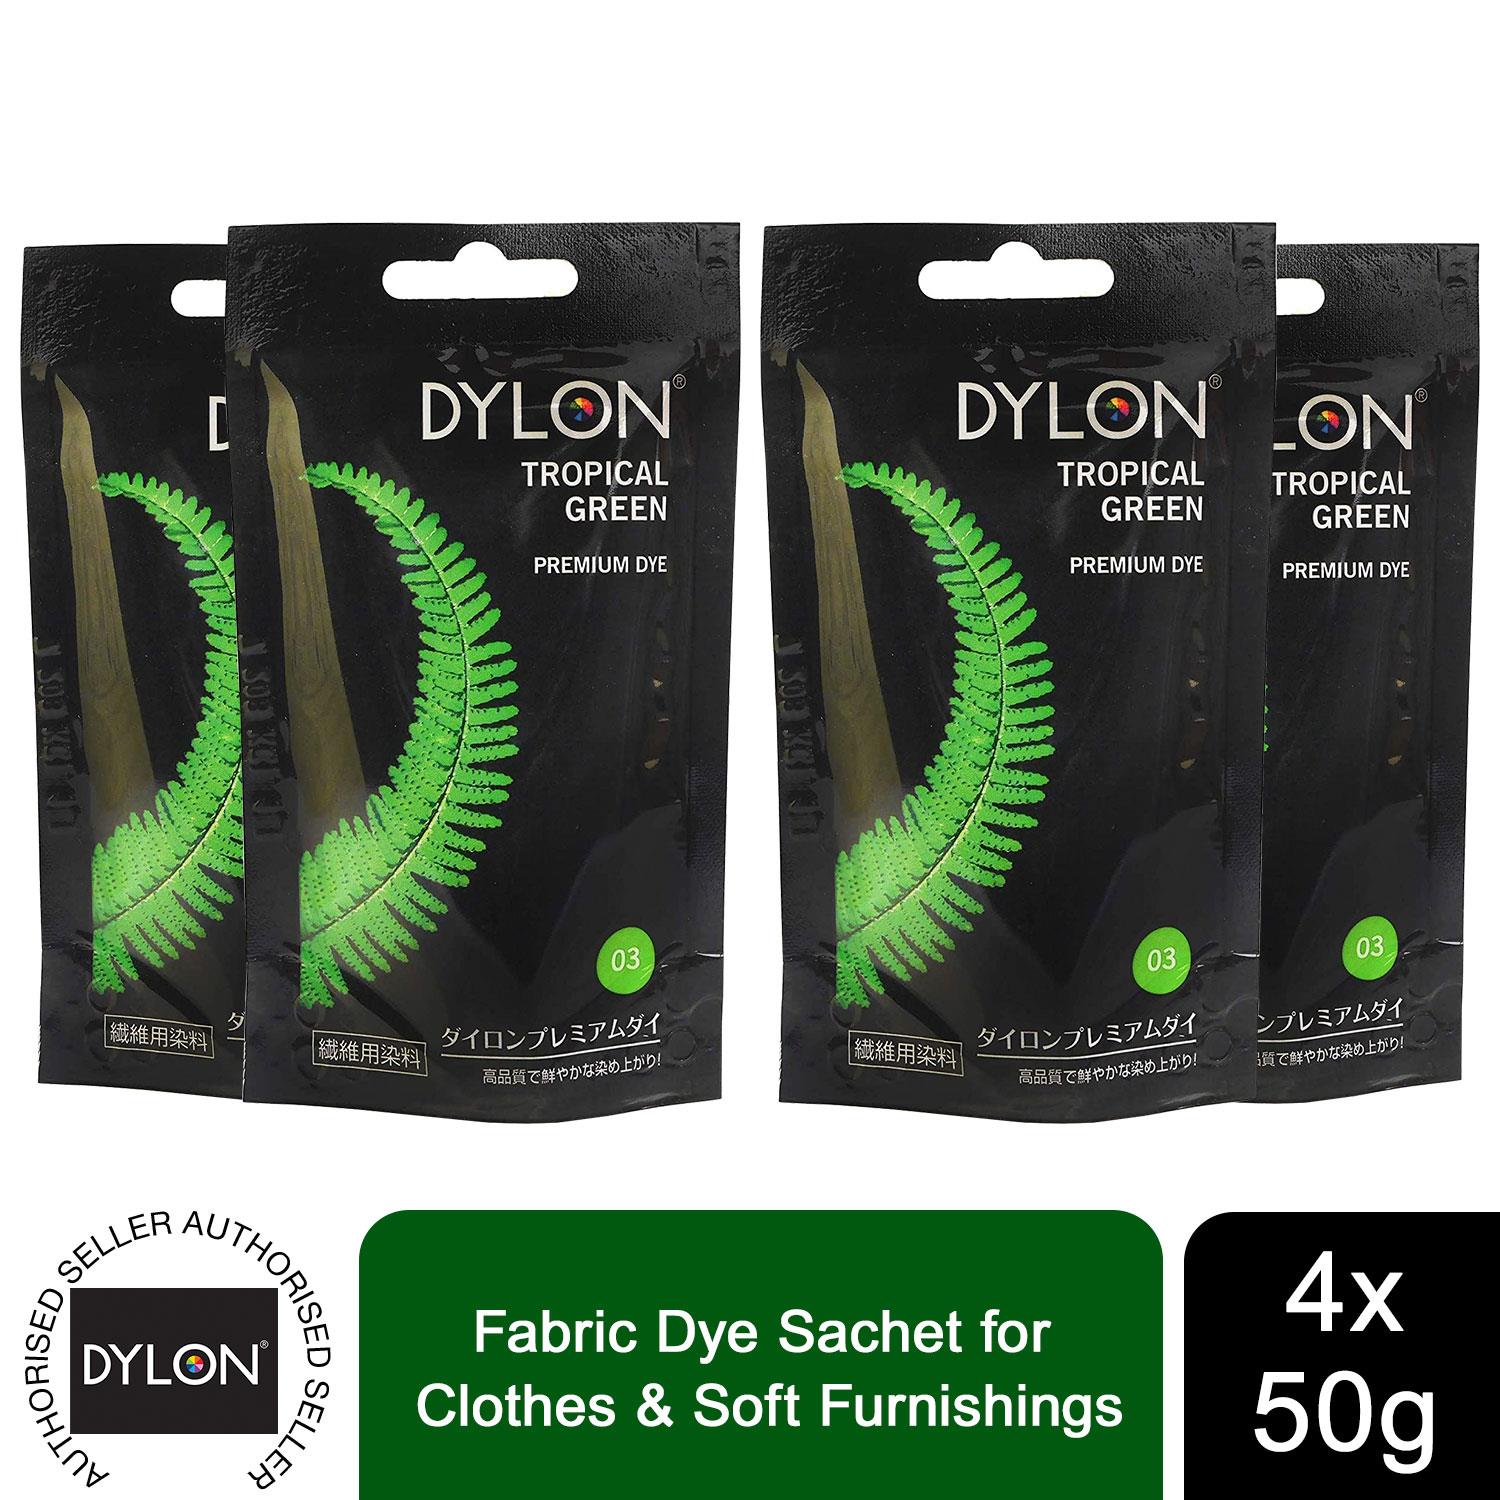 Dylon Hand Fabric Dye Tropical Green